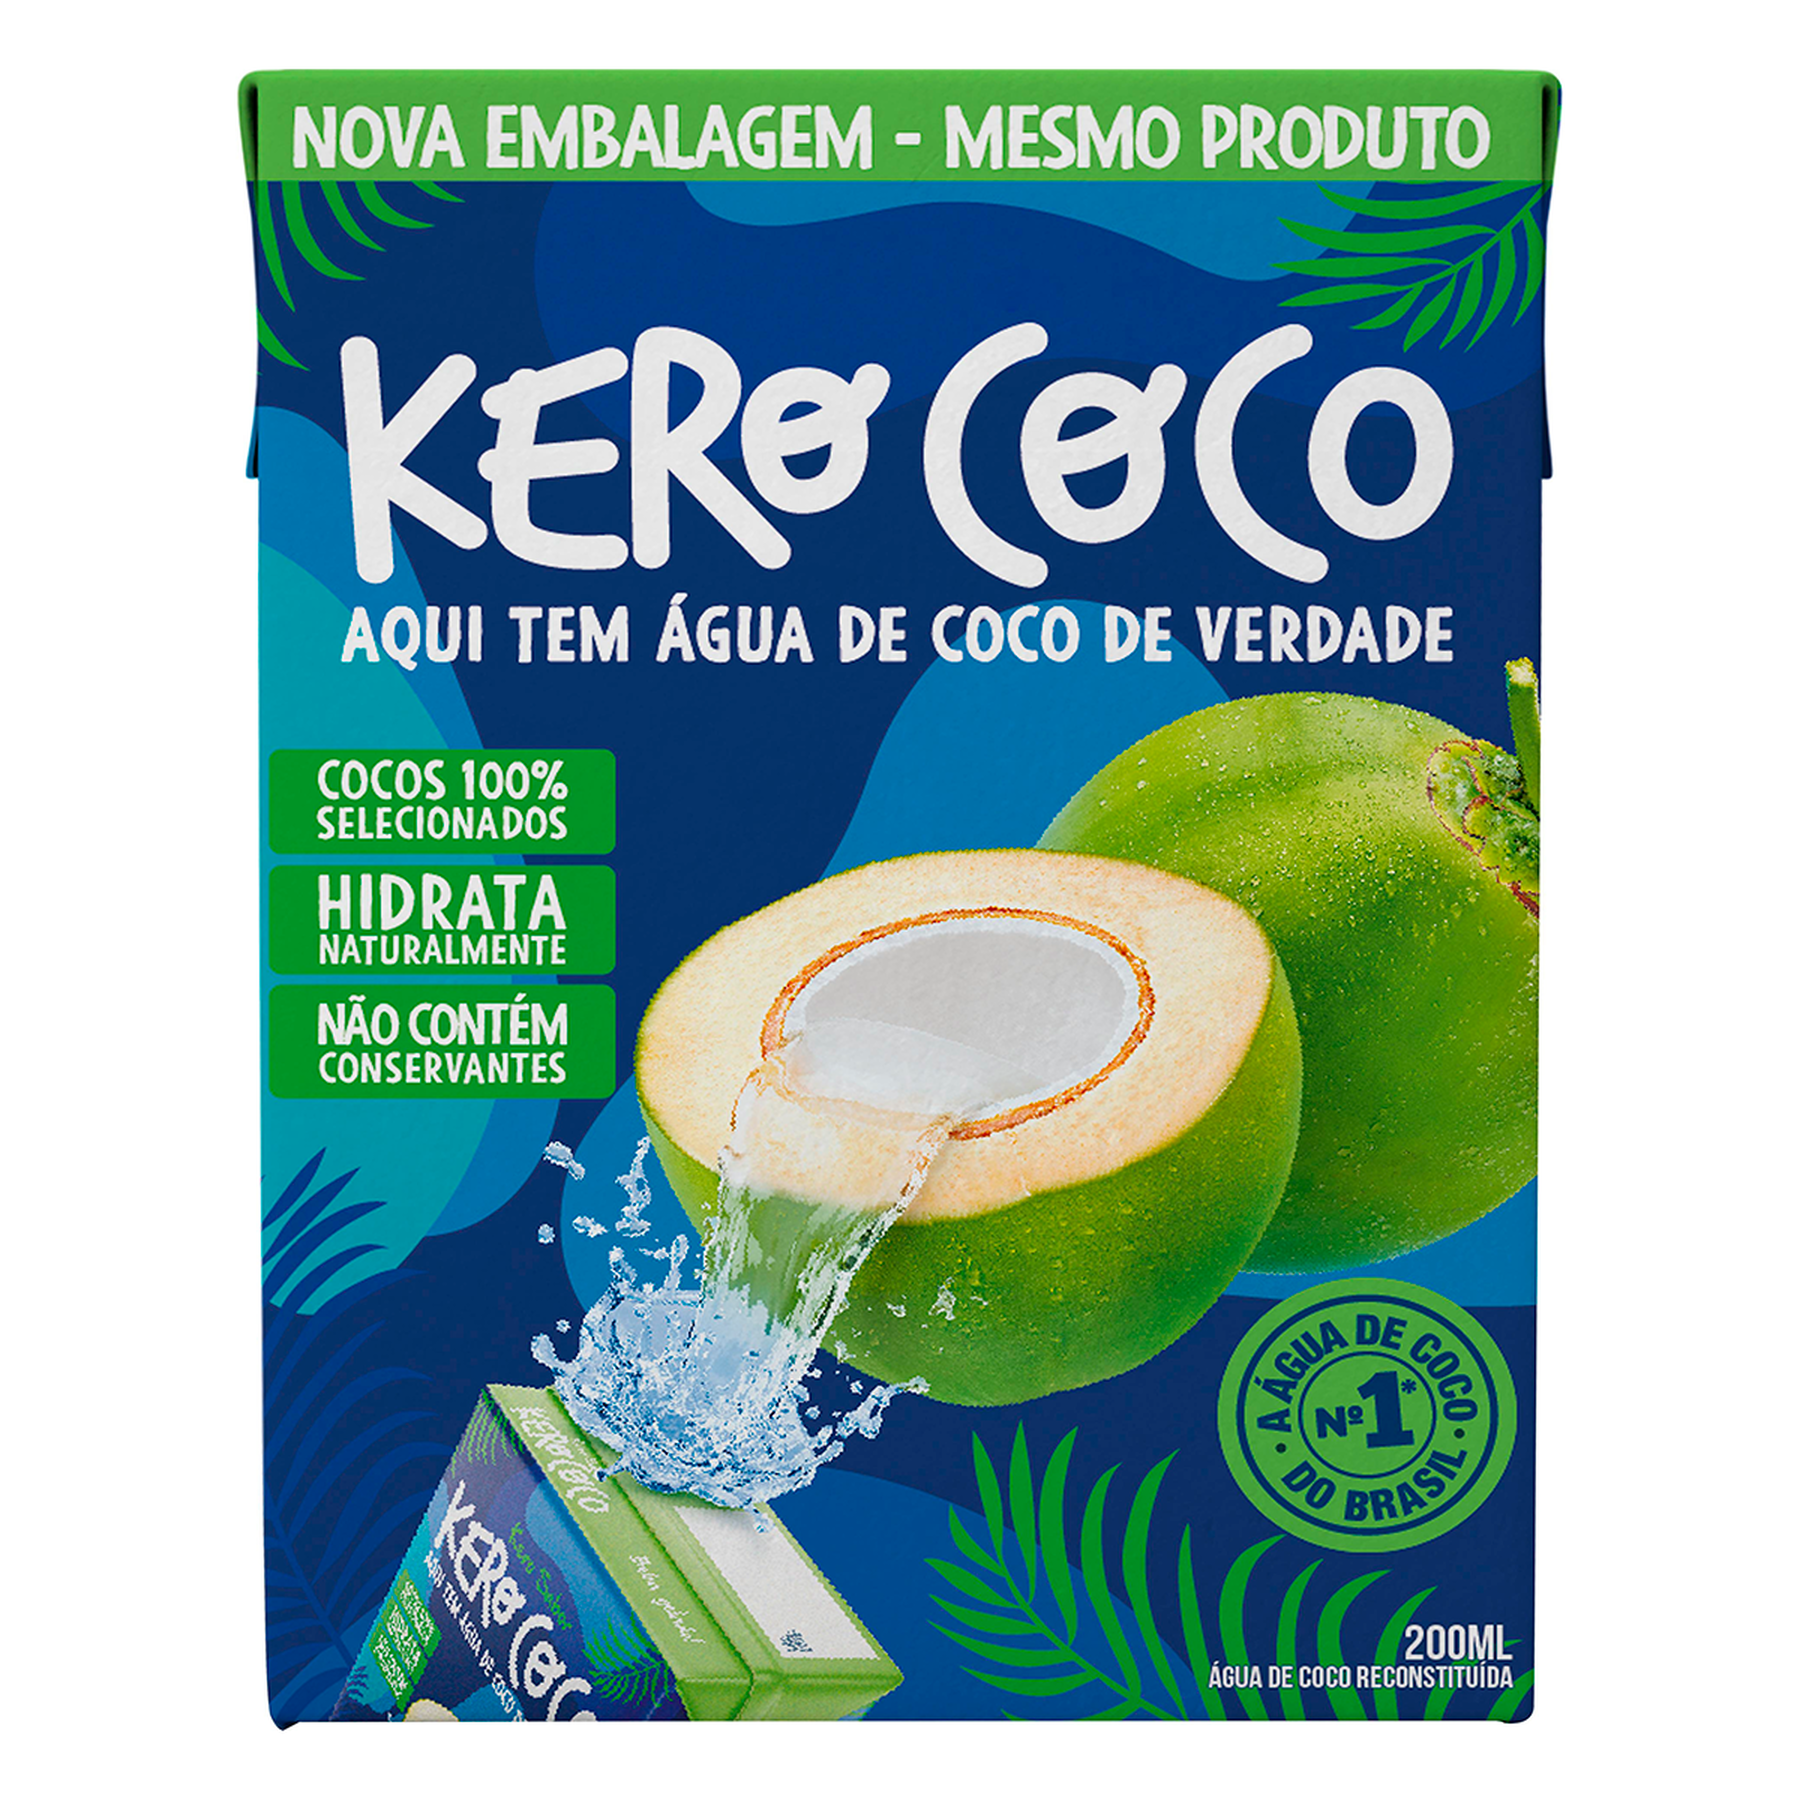 Água de Coco Esterilizada Kero Coco Caixa 200ml